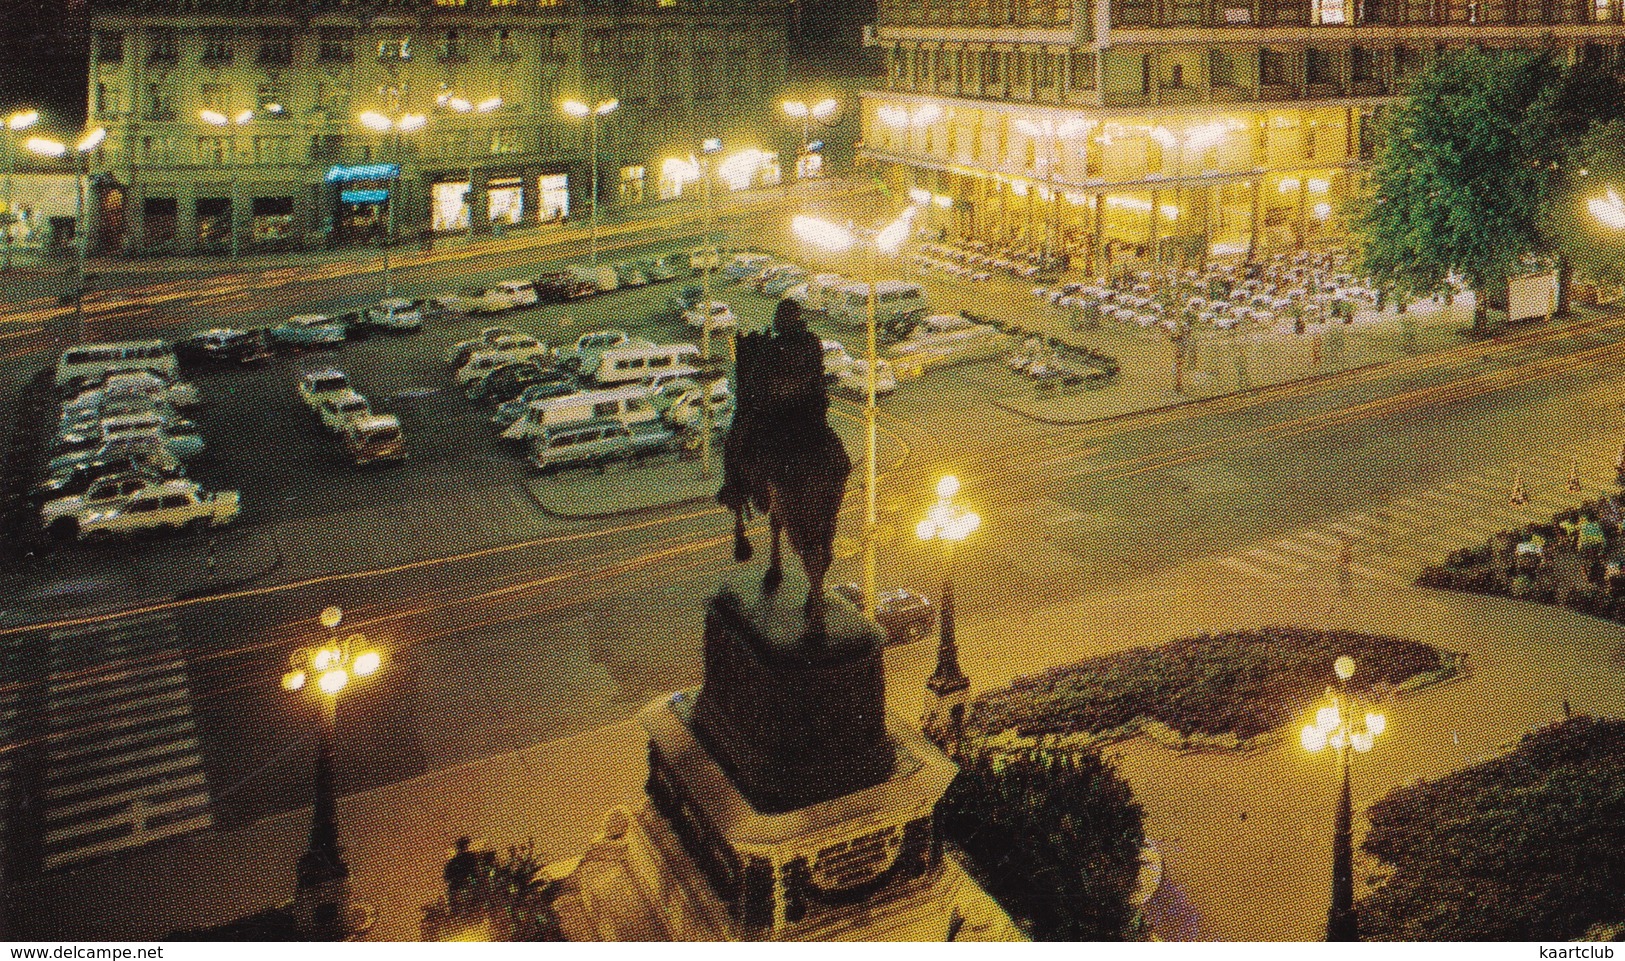 Beograd: Ca. 50 AUTO'S / CARS On Republic Square By Night - Trg Republike - (YU.) - Toerisme